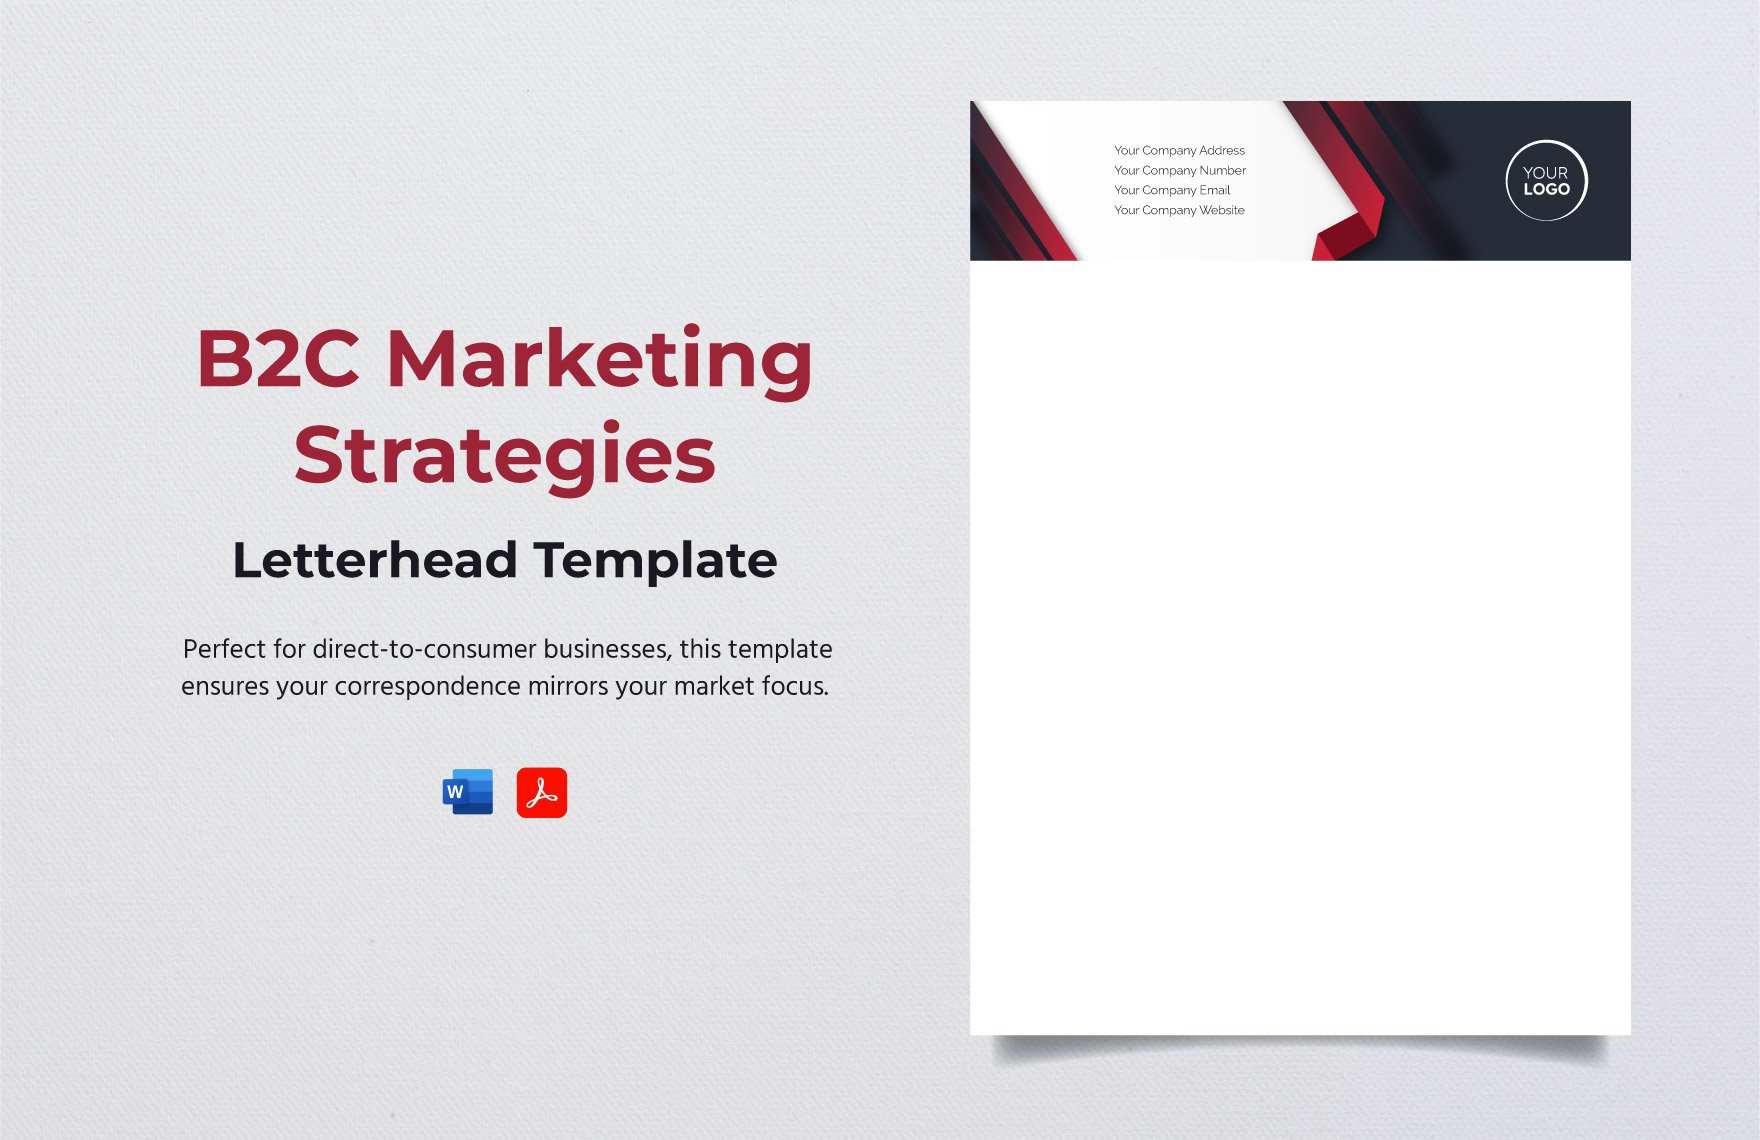 B2C Marketing Strategies Letterhead Template